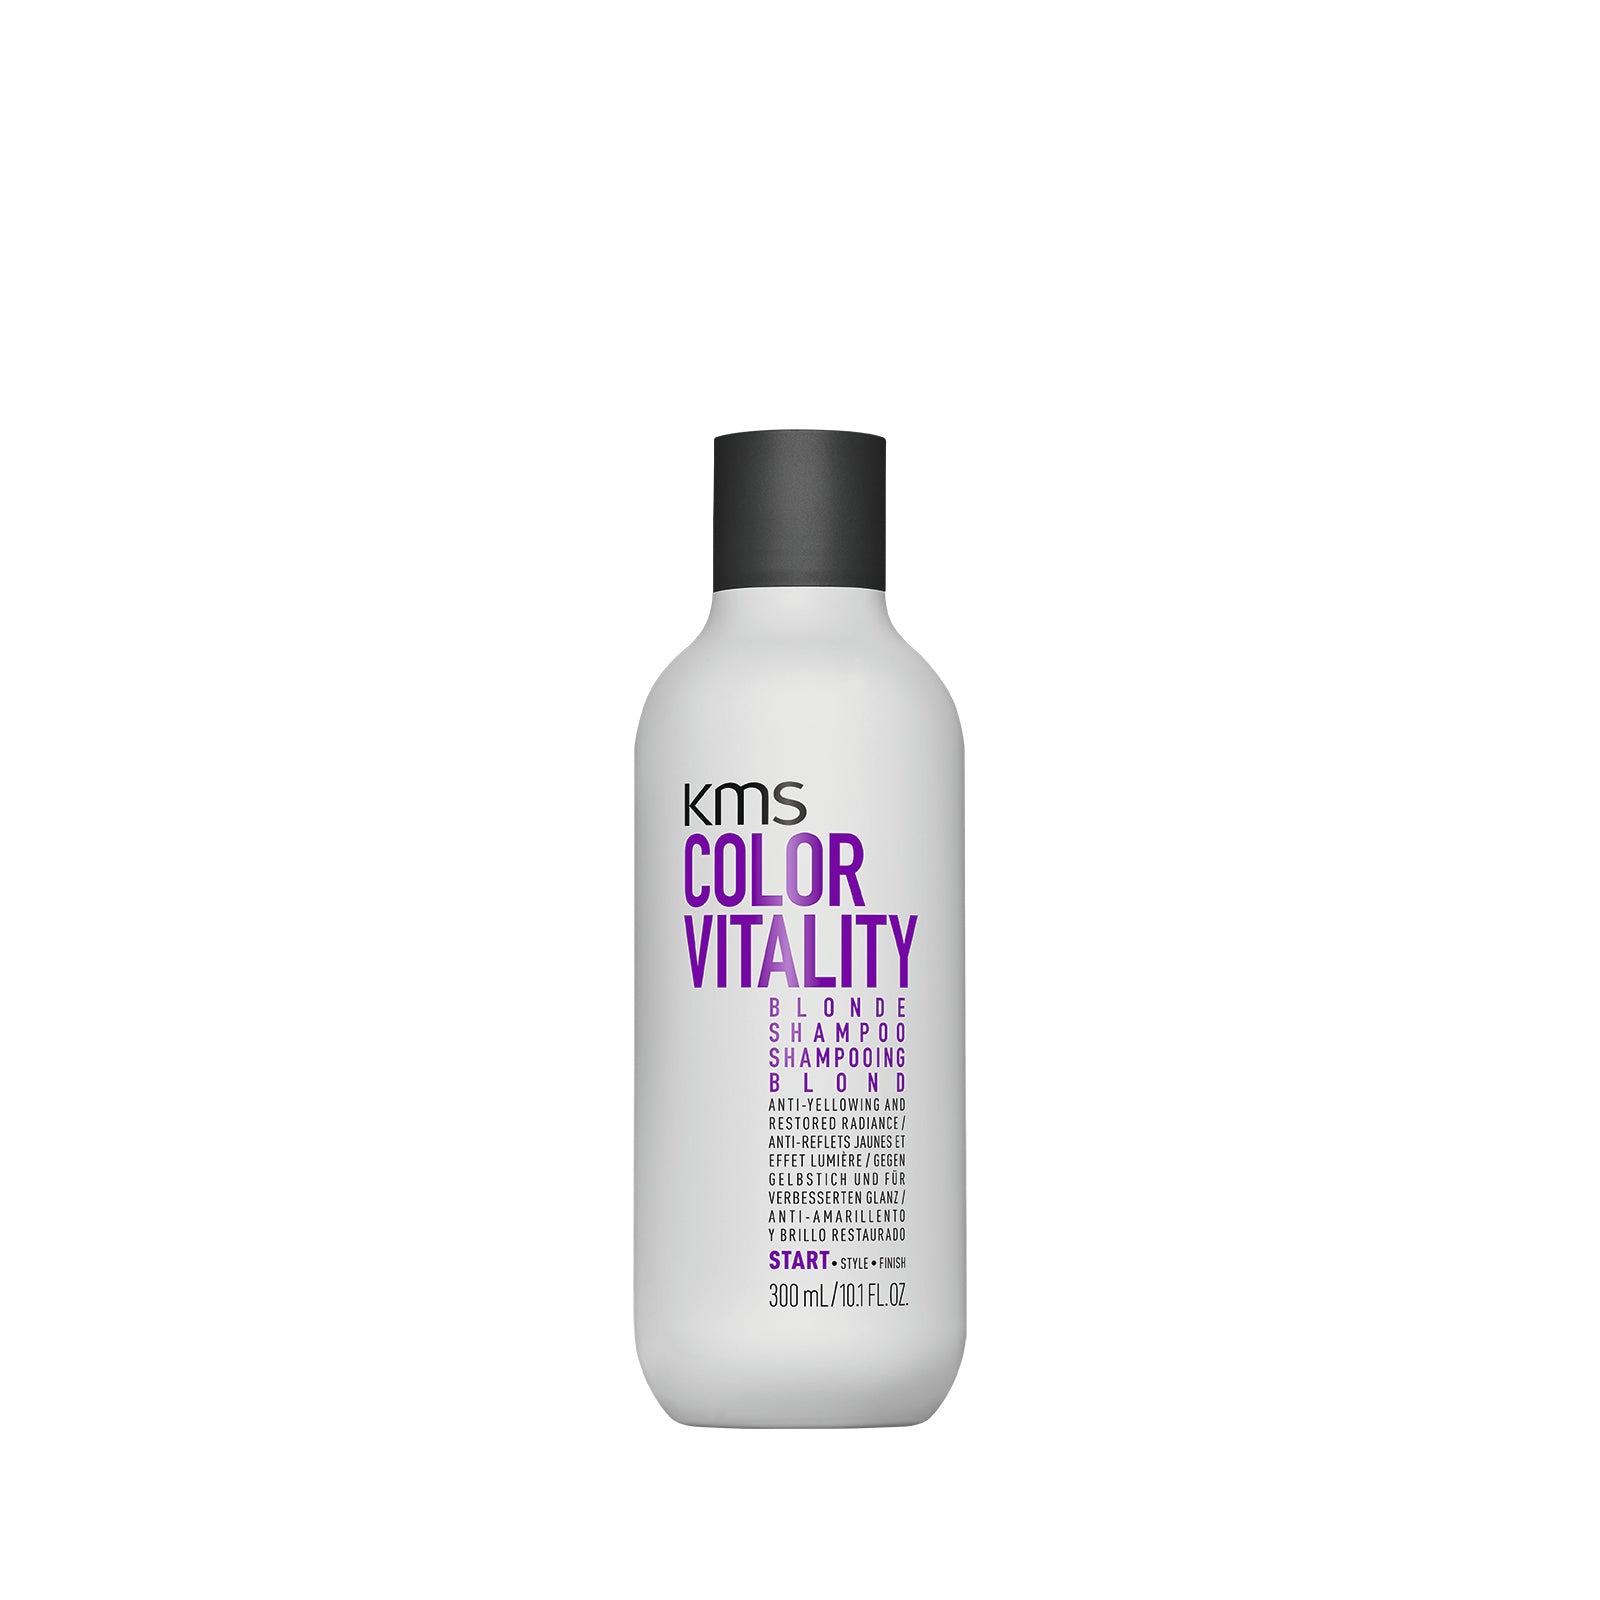 KMS Colorvitality Blonde Shampoo